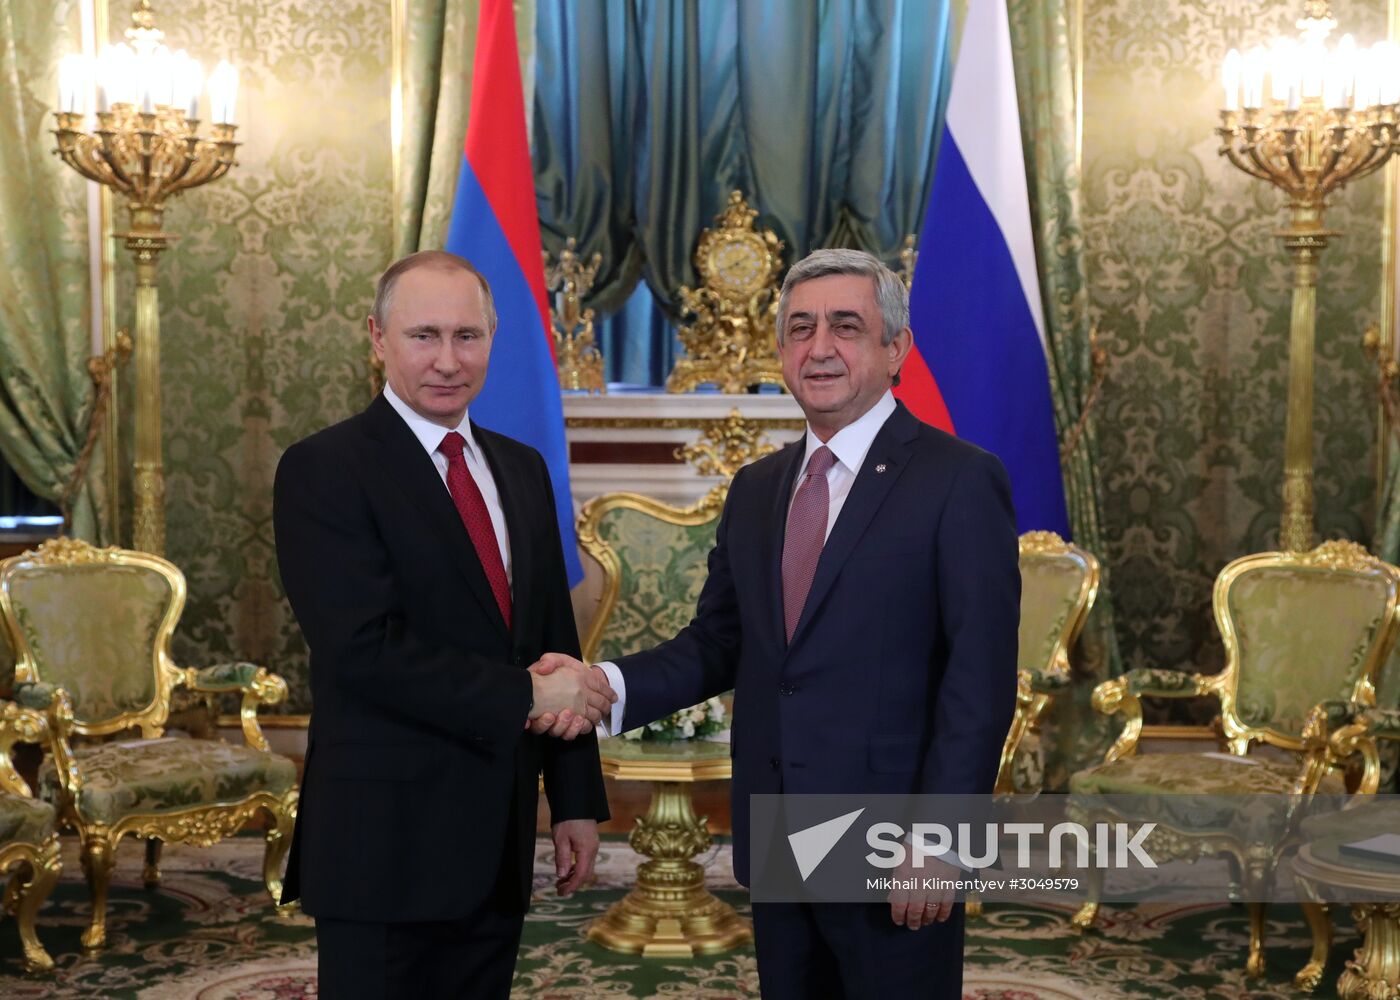 President Vladimir Putin's talks with President of Armenia Serzh Sargsyan